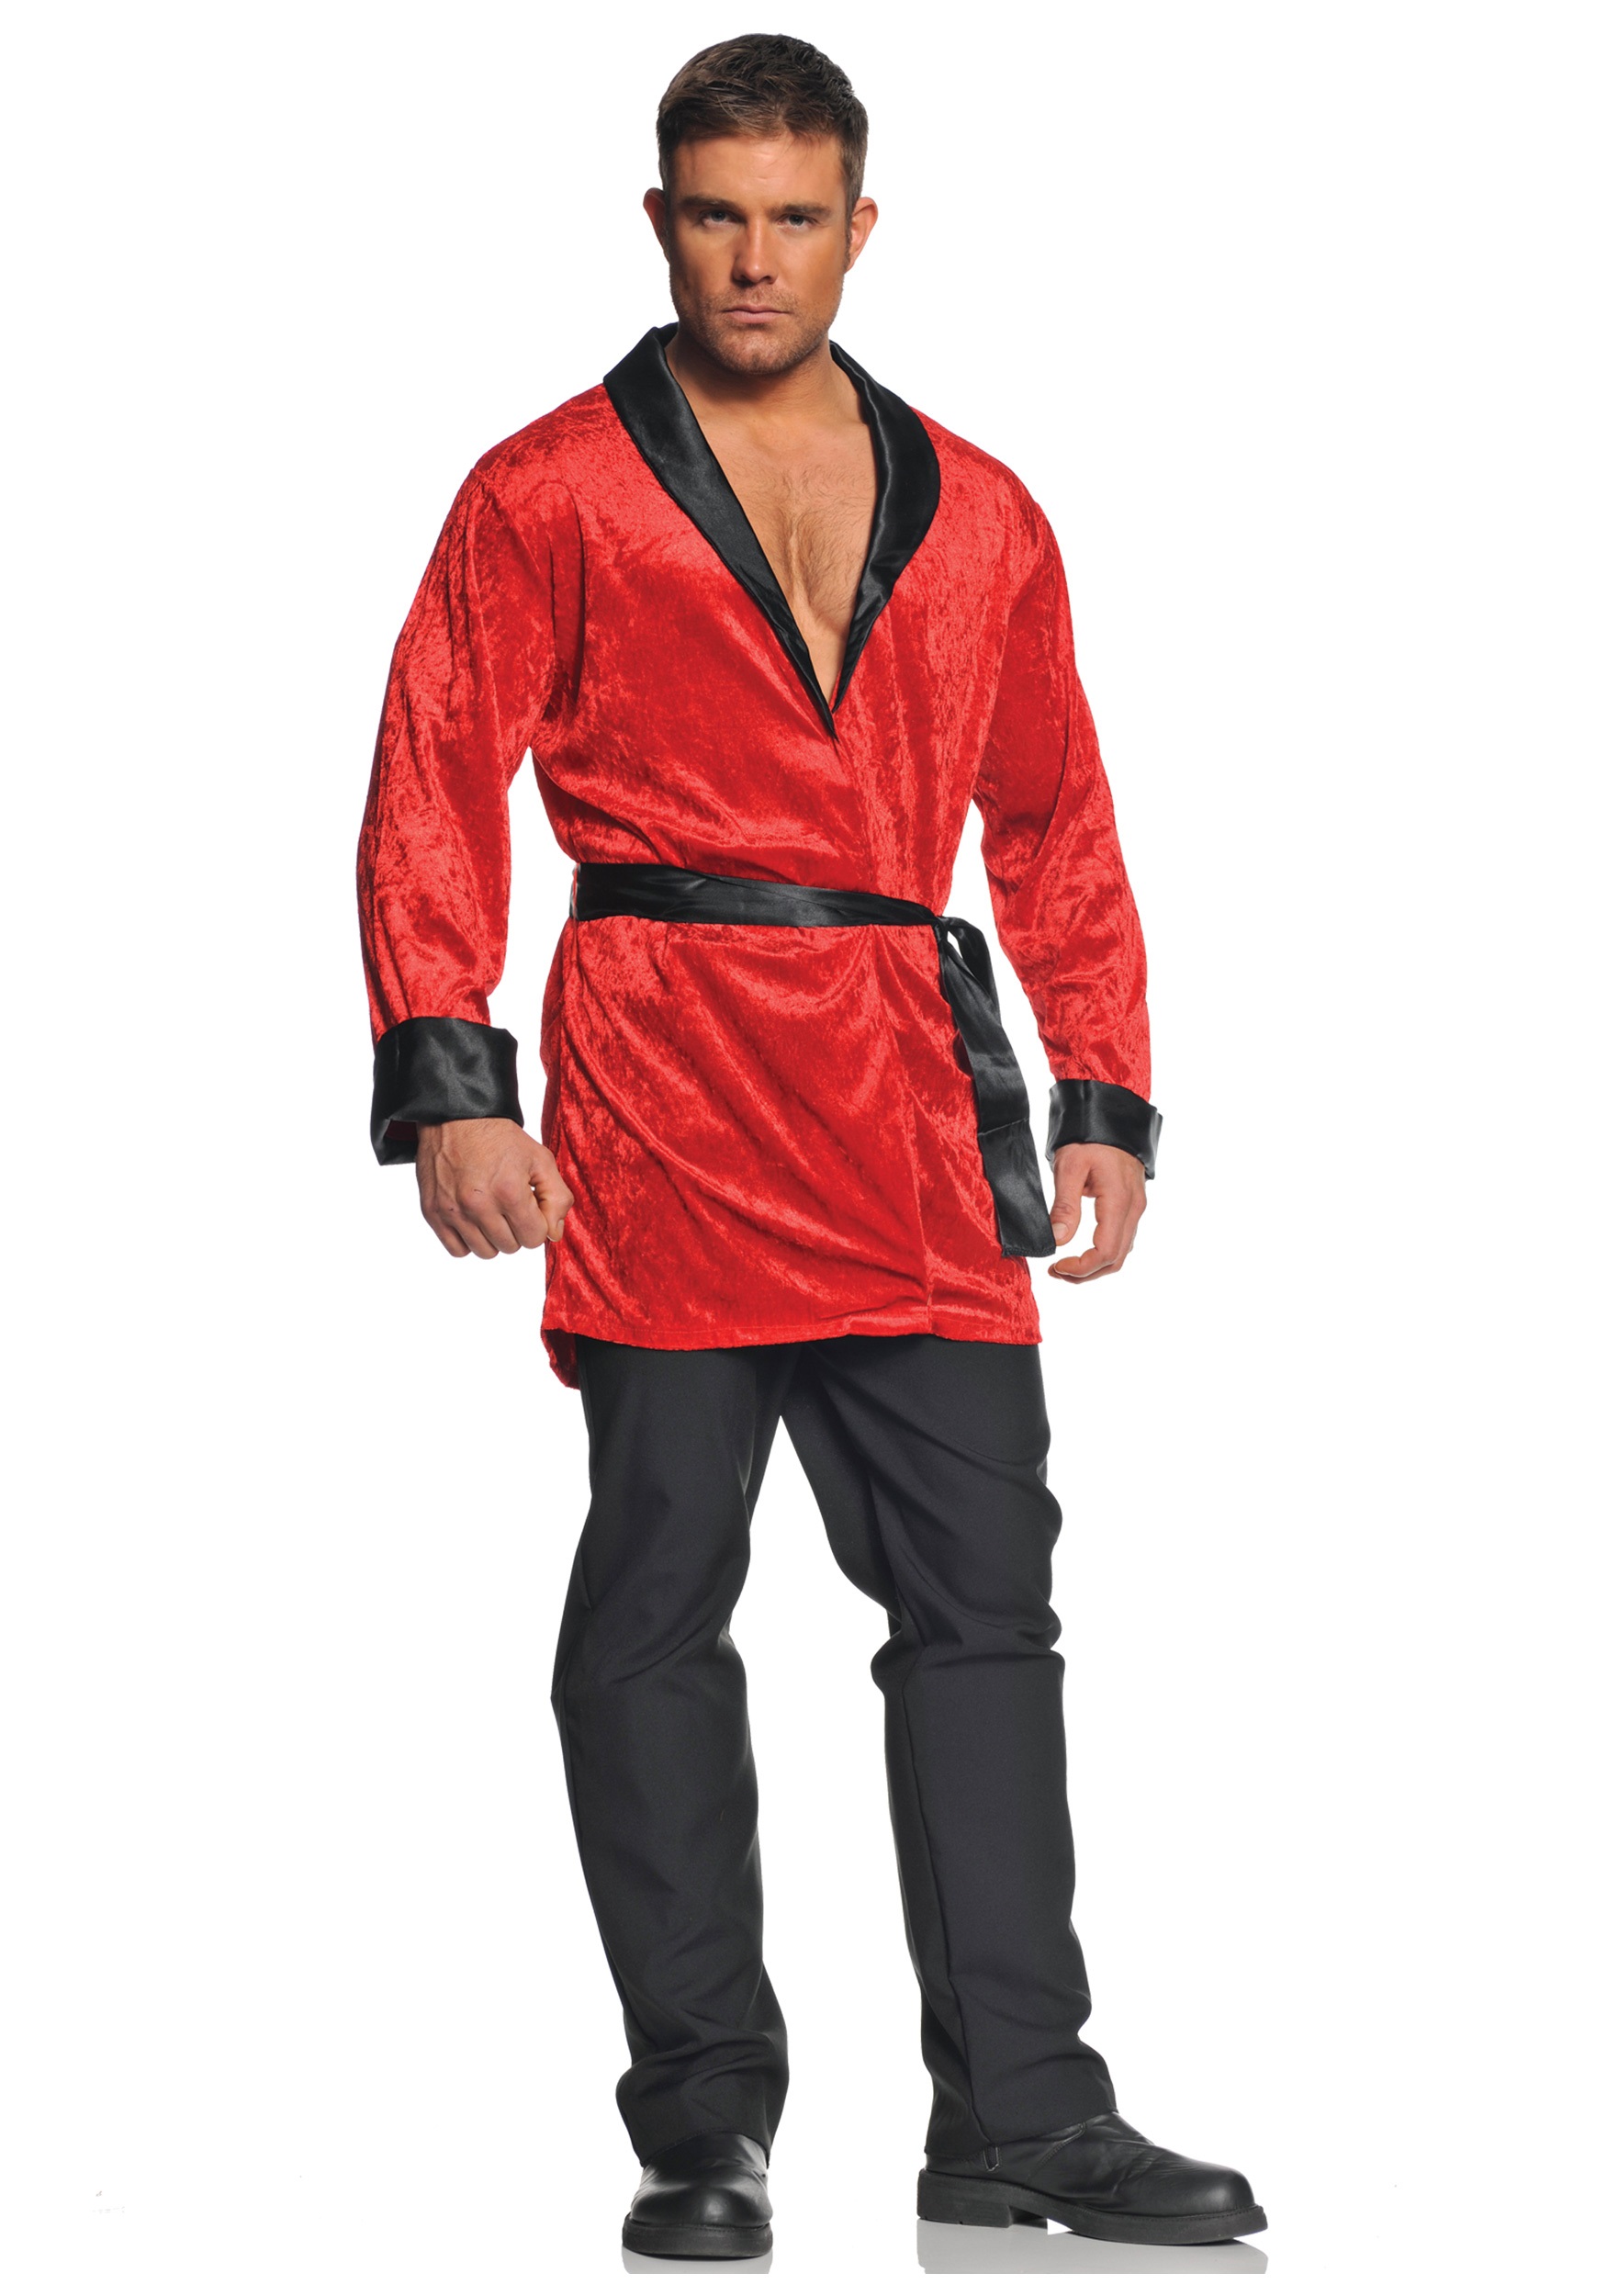 Red Smoking Jacket Costume for Men | Playboy Mens Costume | Hustle Jacket